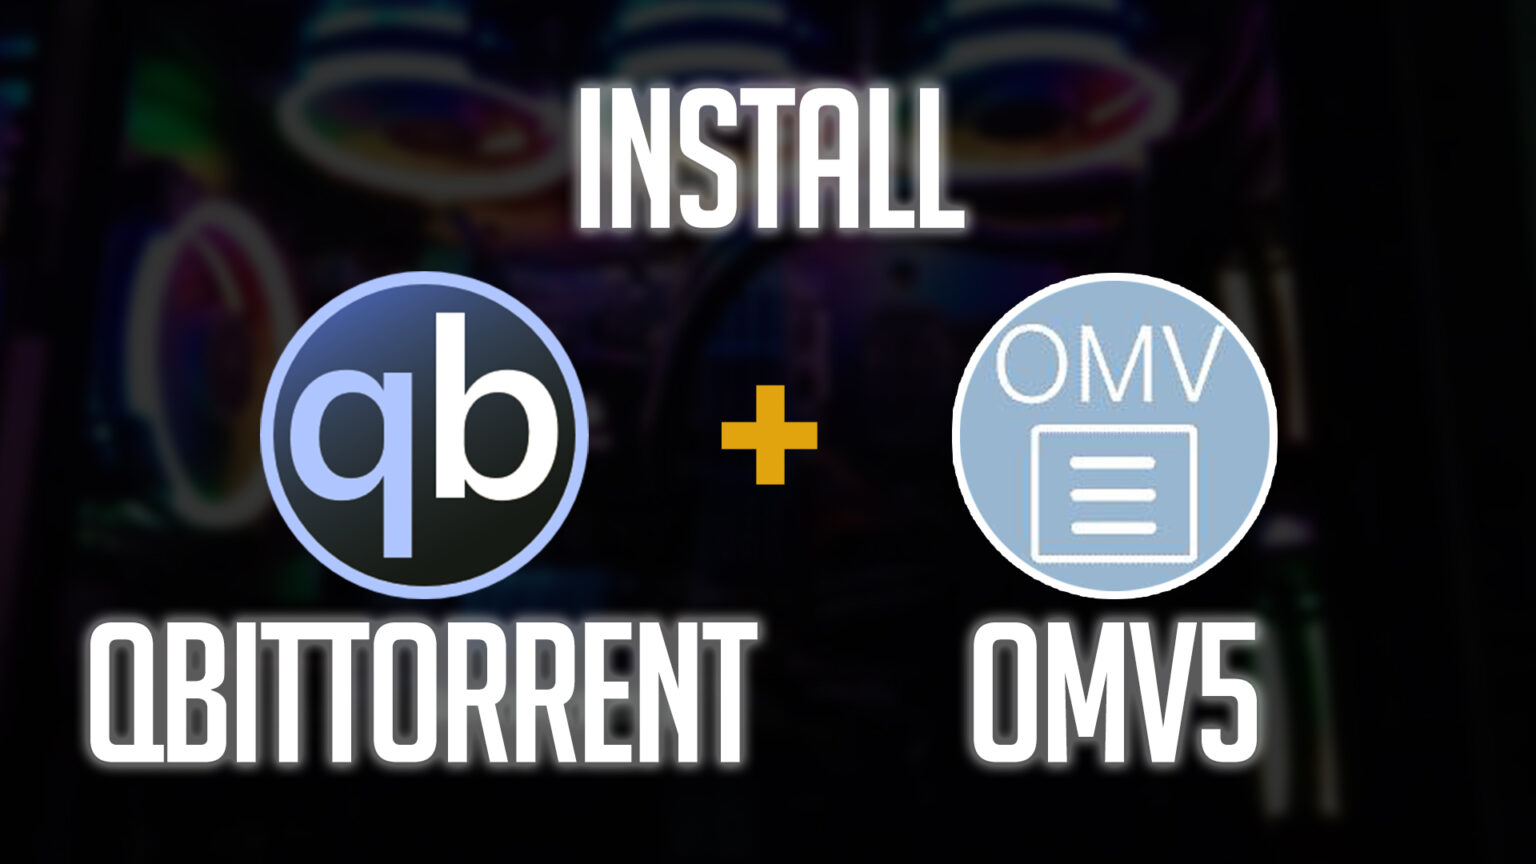 qBittorrent 4.5.4 for ios instal free